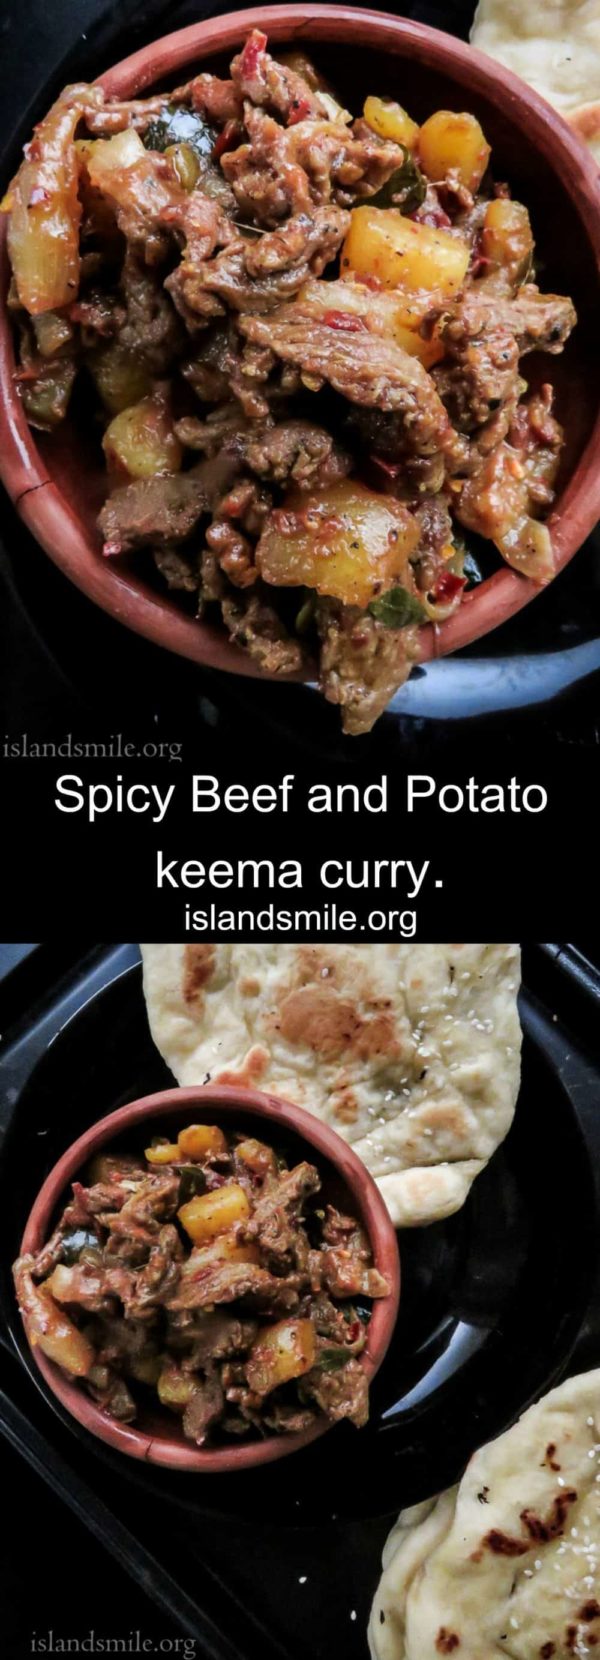 Sri Lankan Spicy Beef and Potato keema curry | islandsmile